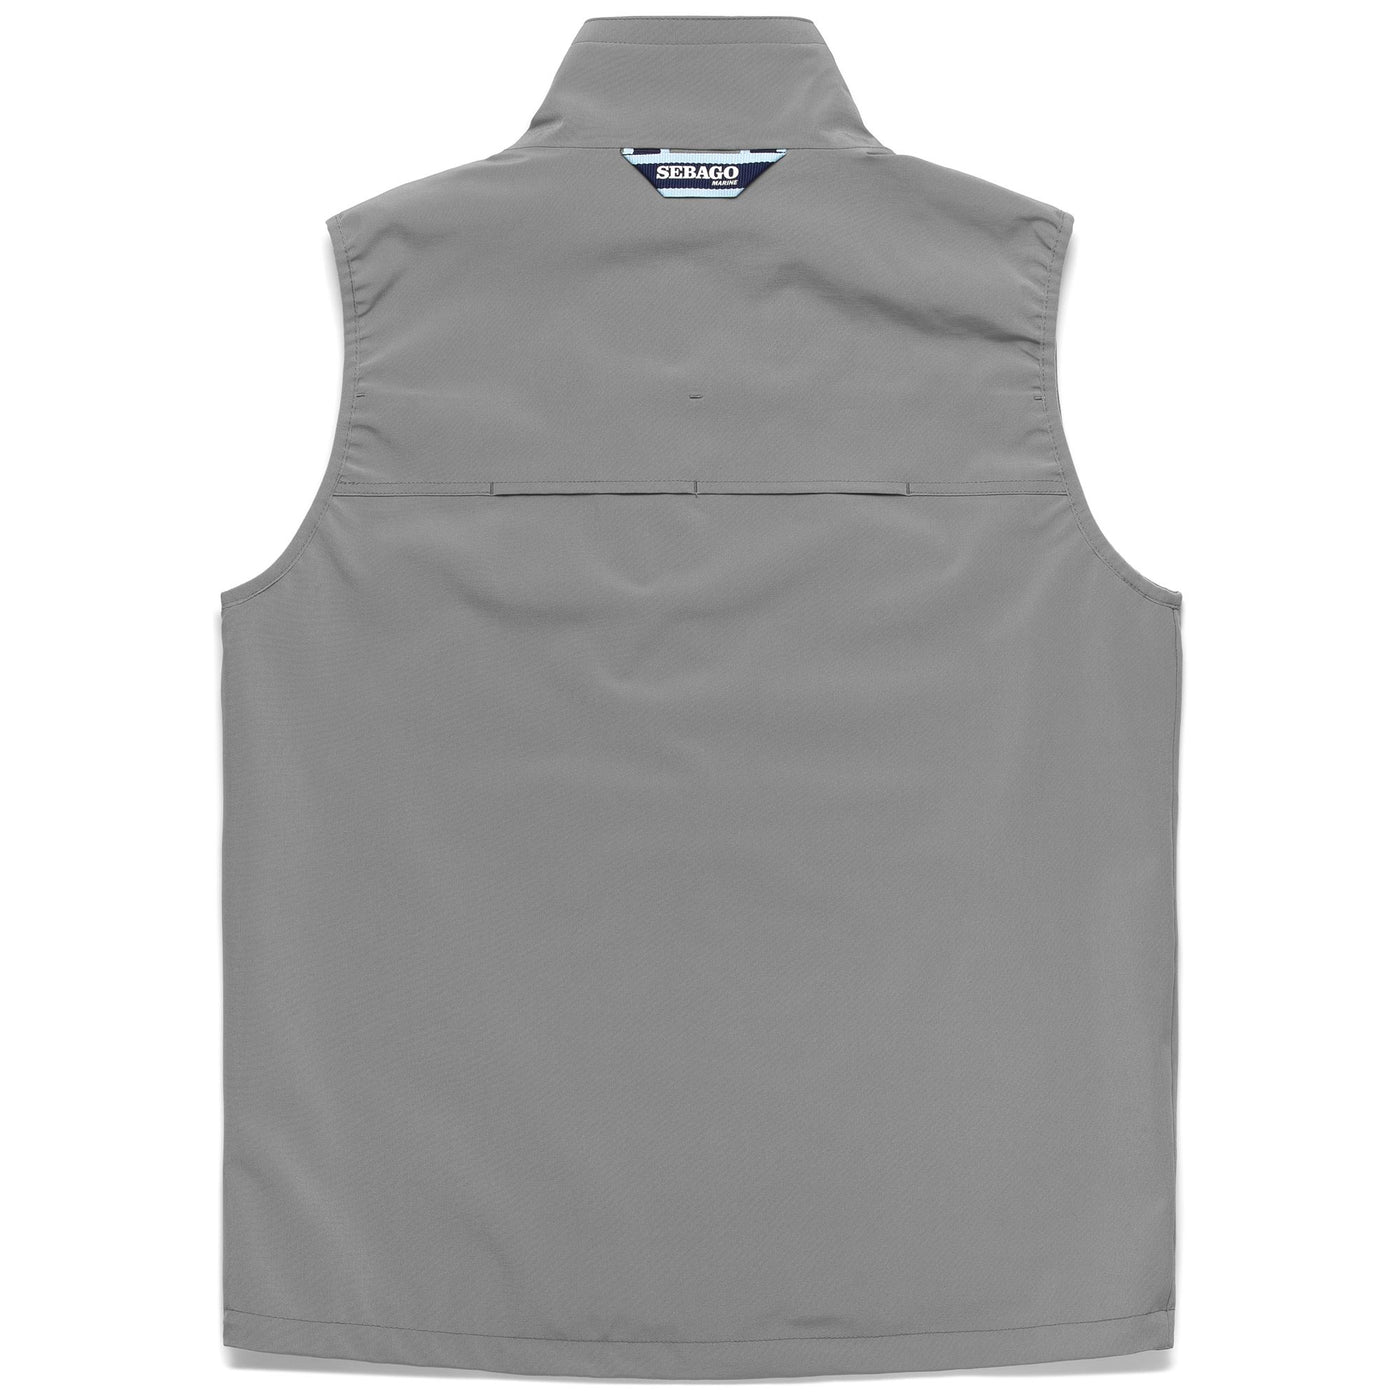 Jackets Unisex CREW VEST Vest GREY Dressed Front (jpg Rgb)	